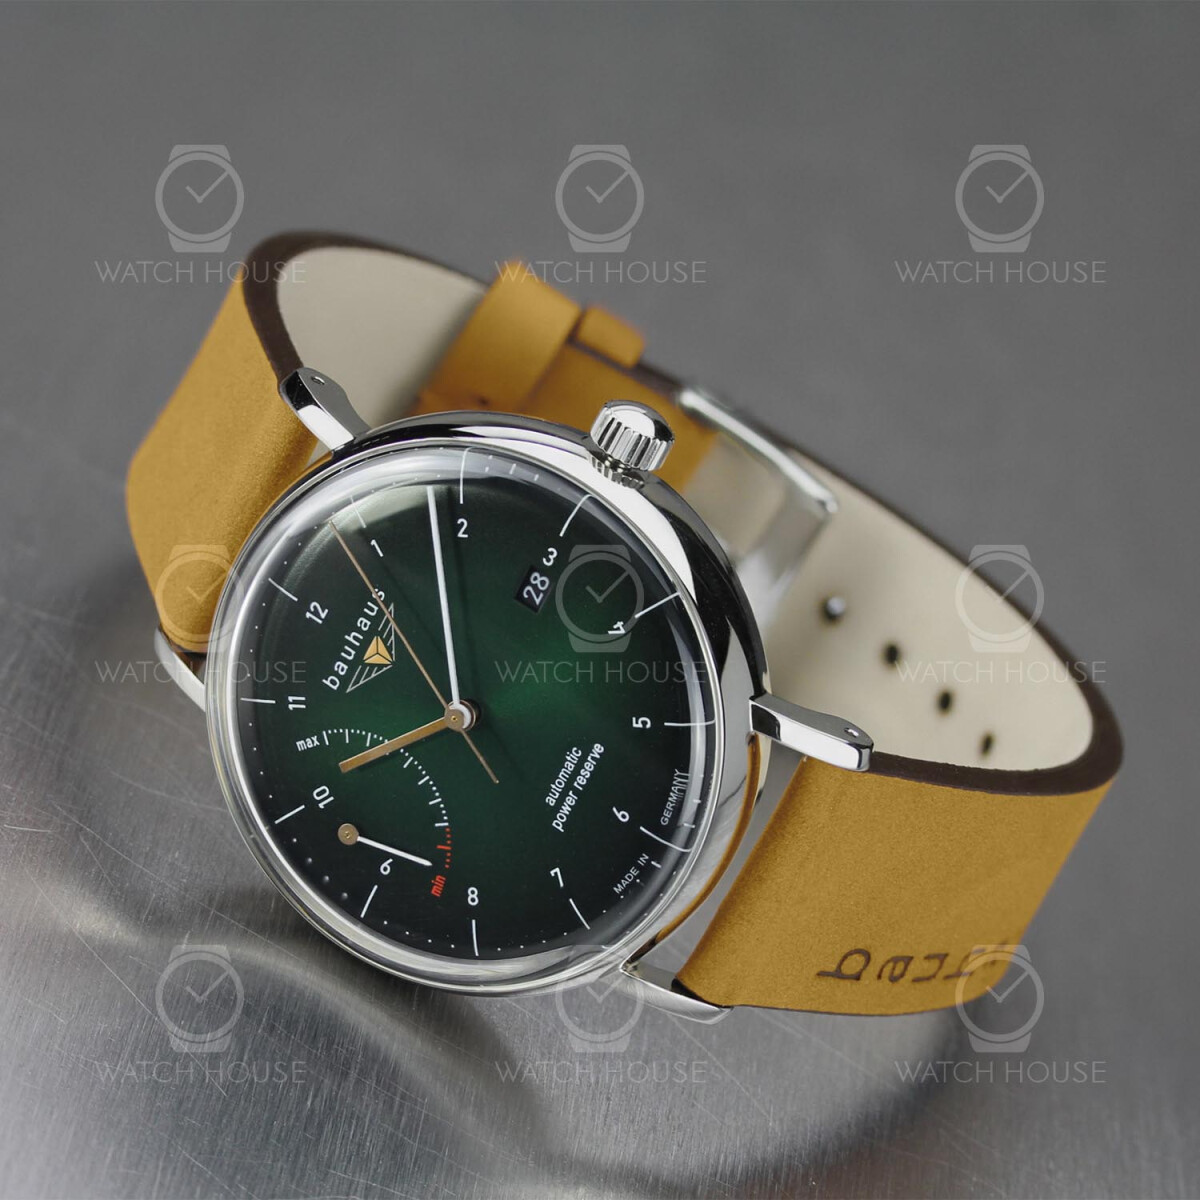 Bauhaus Mens Automatic Green - Power Display Watch 2160-4 Reserve